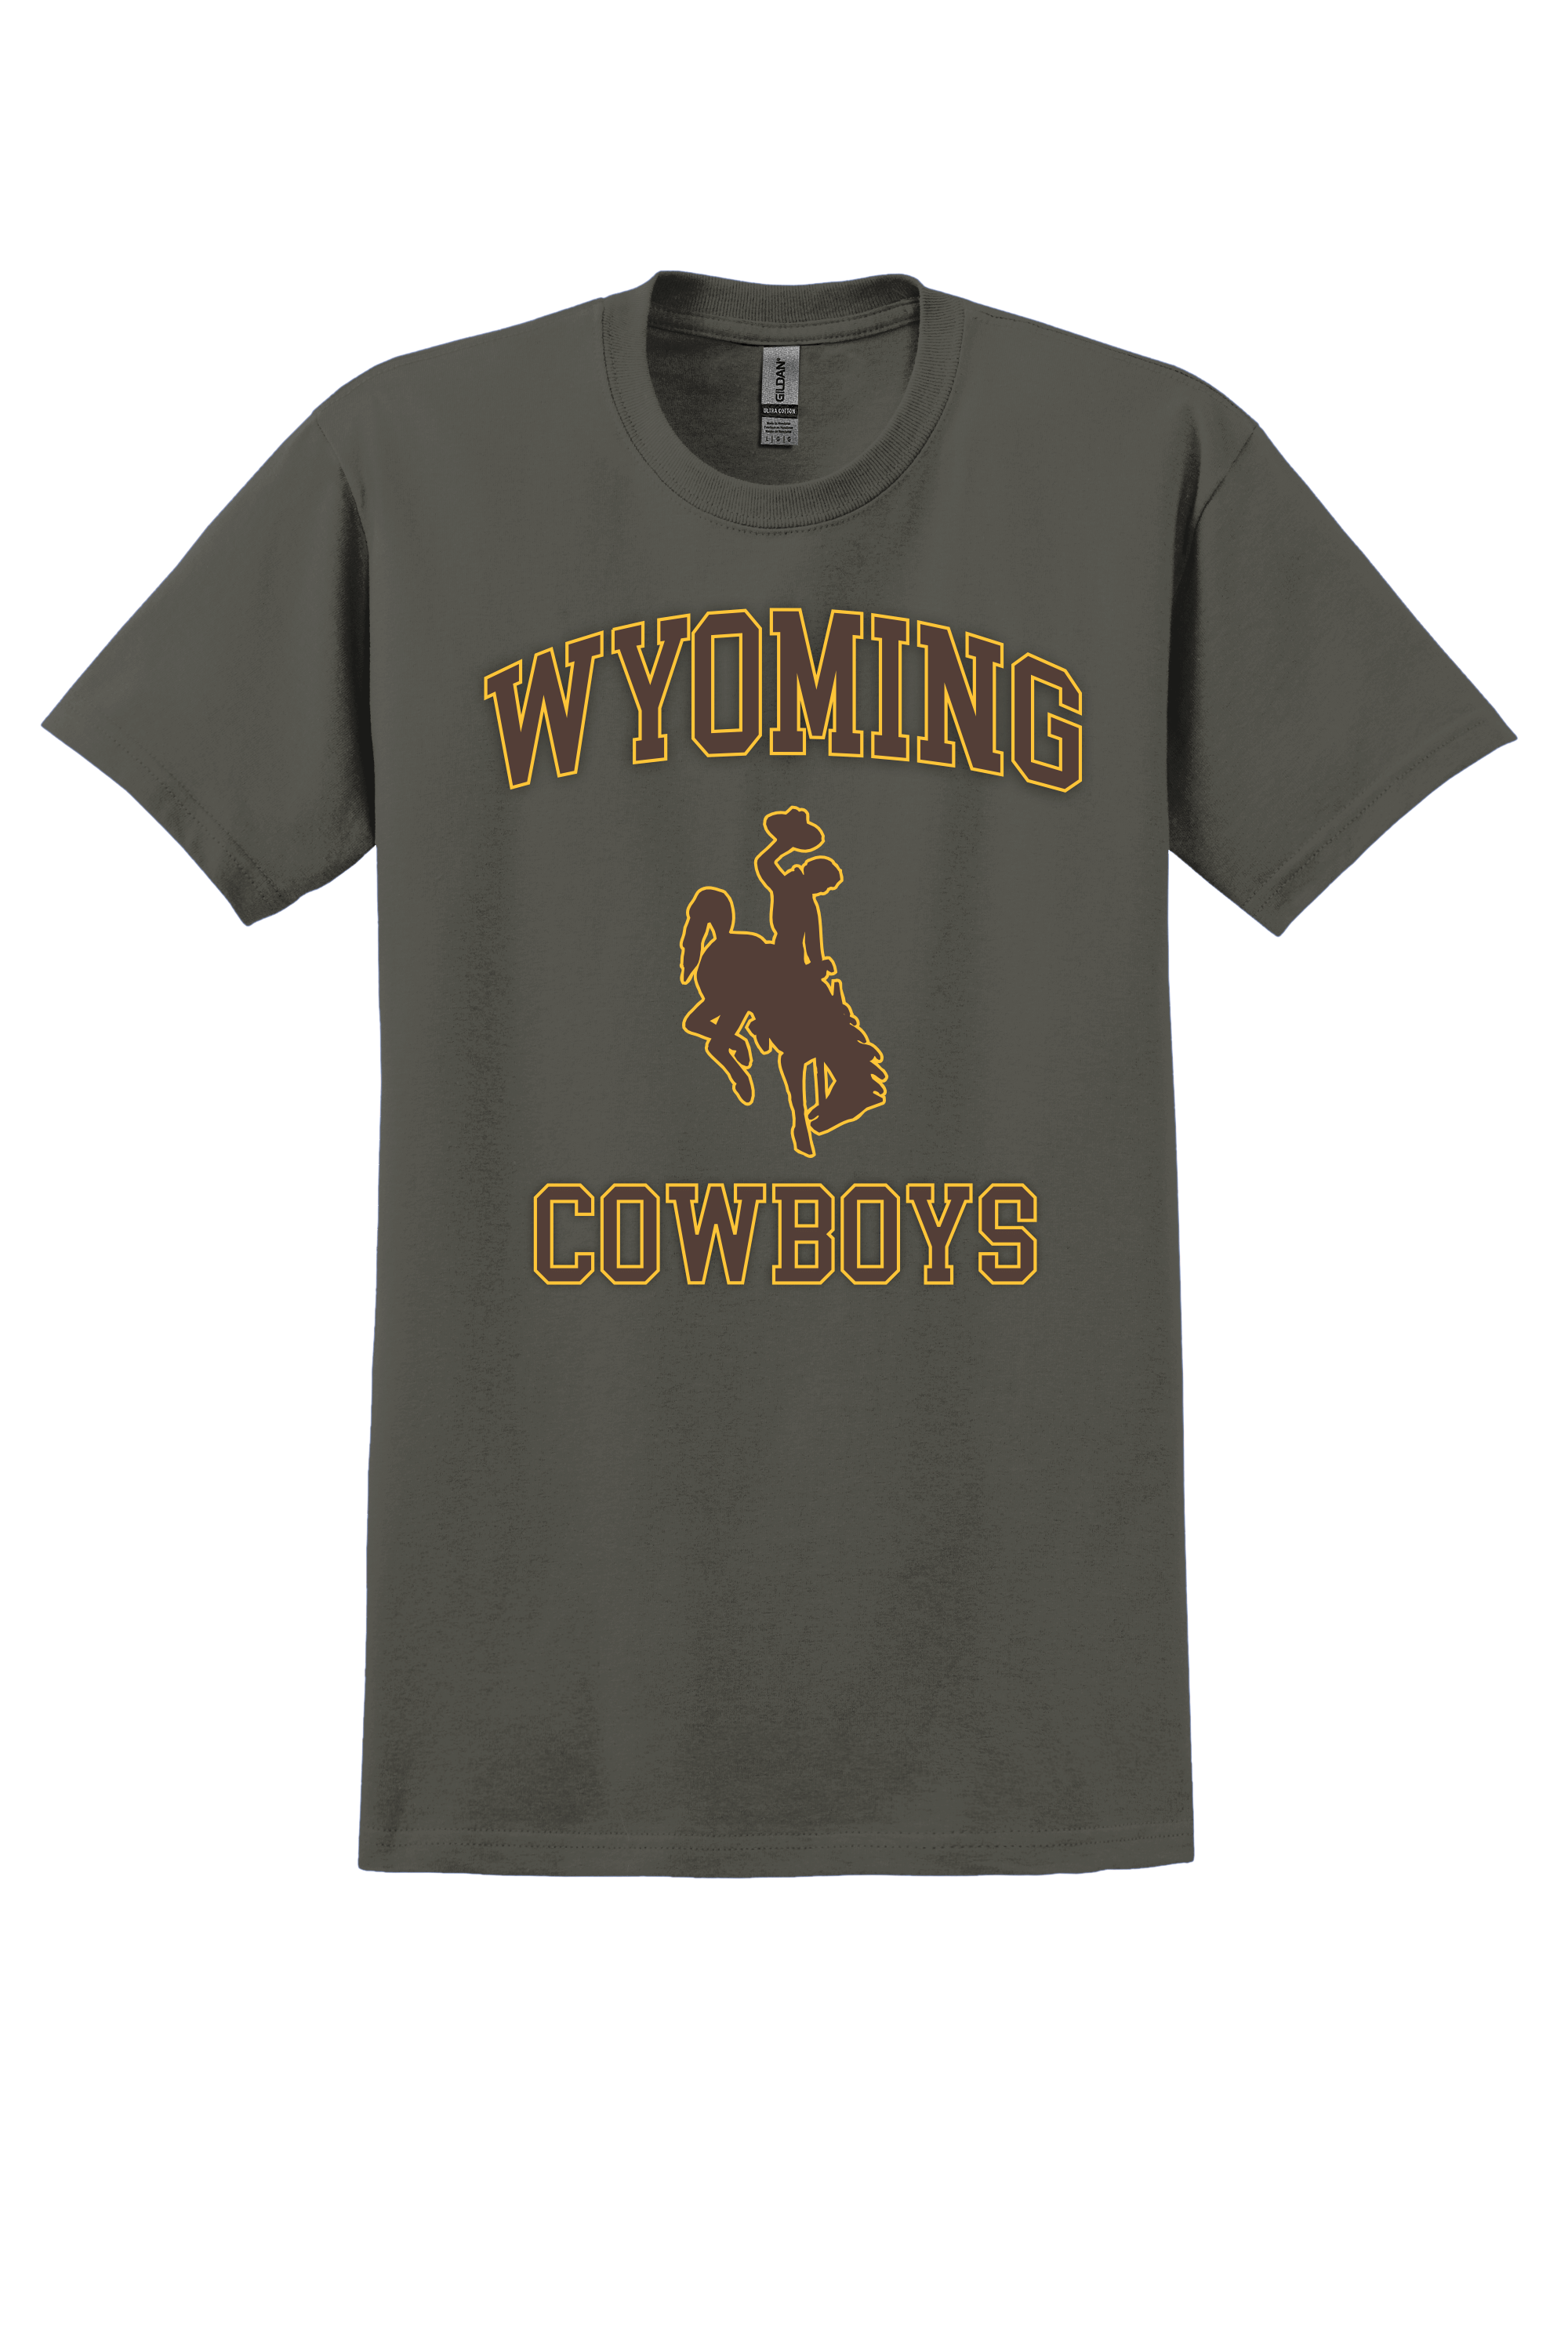 Wyoming Cowboys T-shirt- Olive